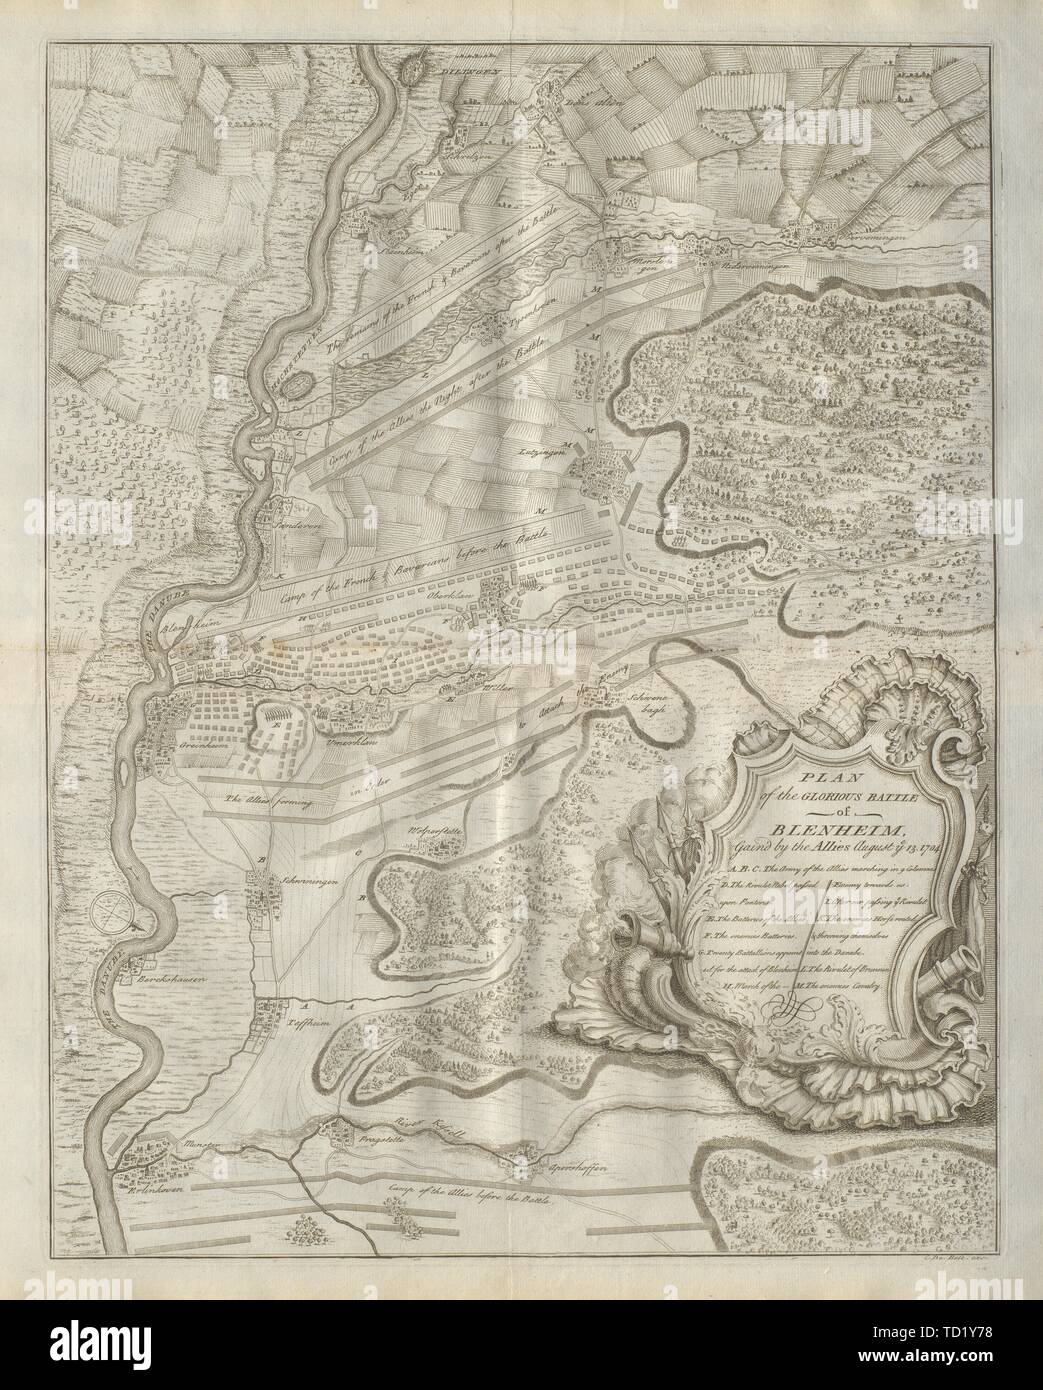 Plan of the glorious Battle of Blenheim, 1704. Höchstädt. DU BOSC 1736 old map Stock Photo